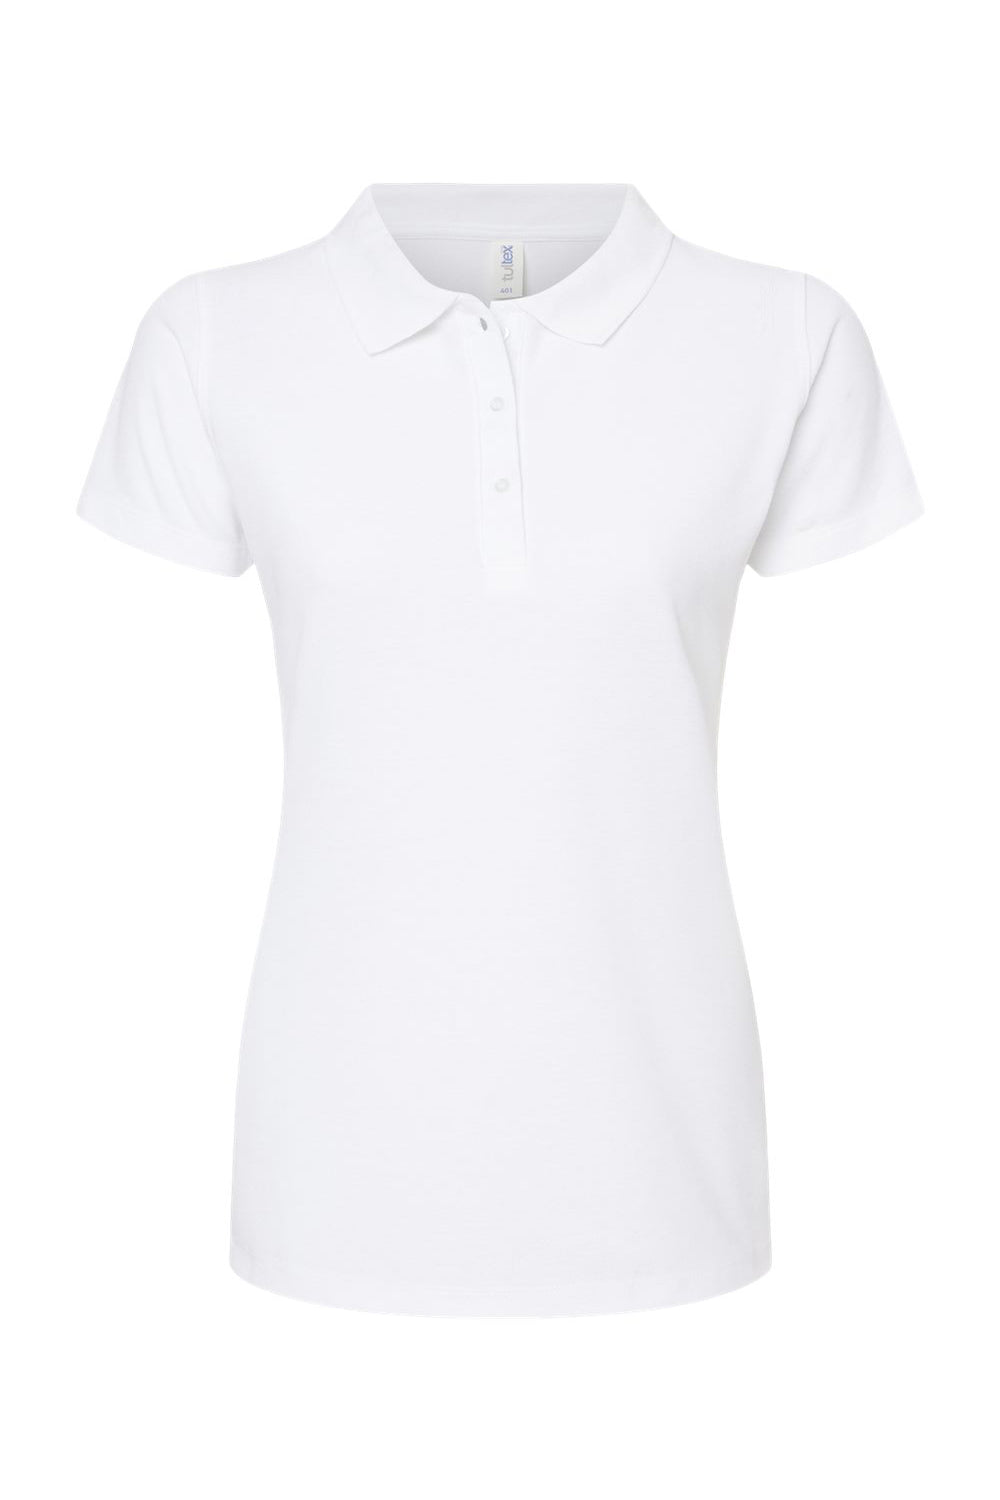 Tultex 401 Womens Sport Shirt Sleeve Polo Shirt White Flat Front